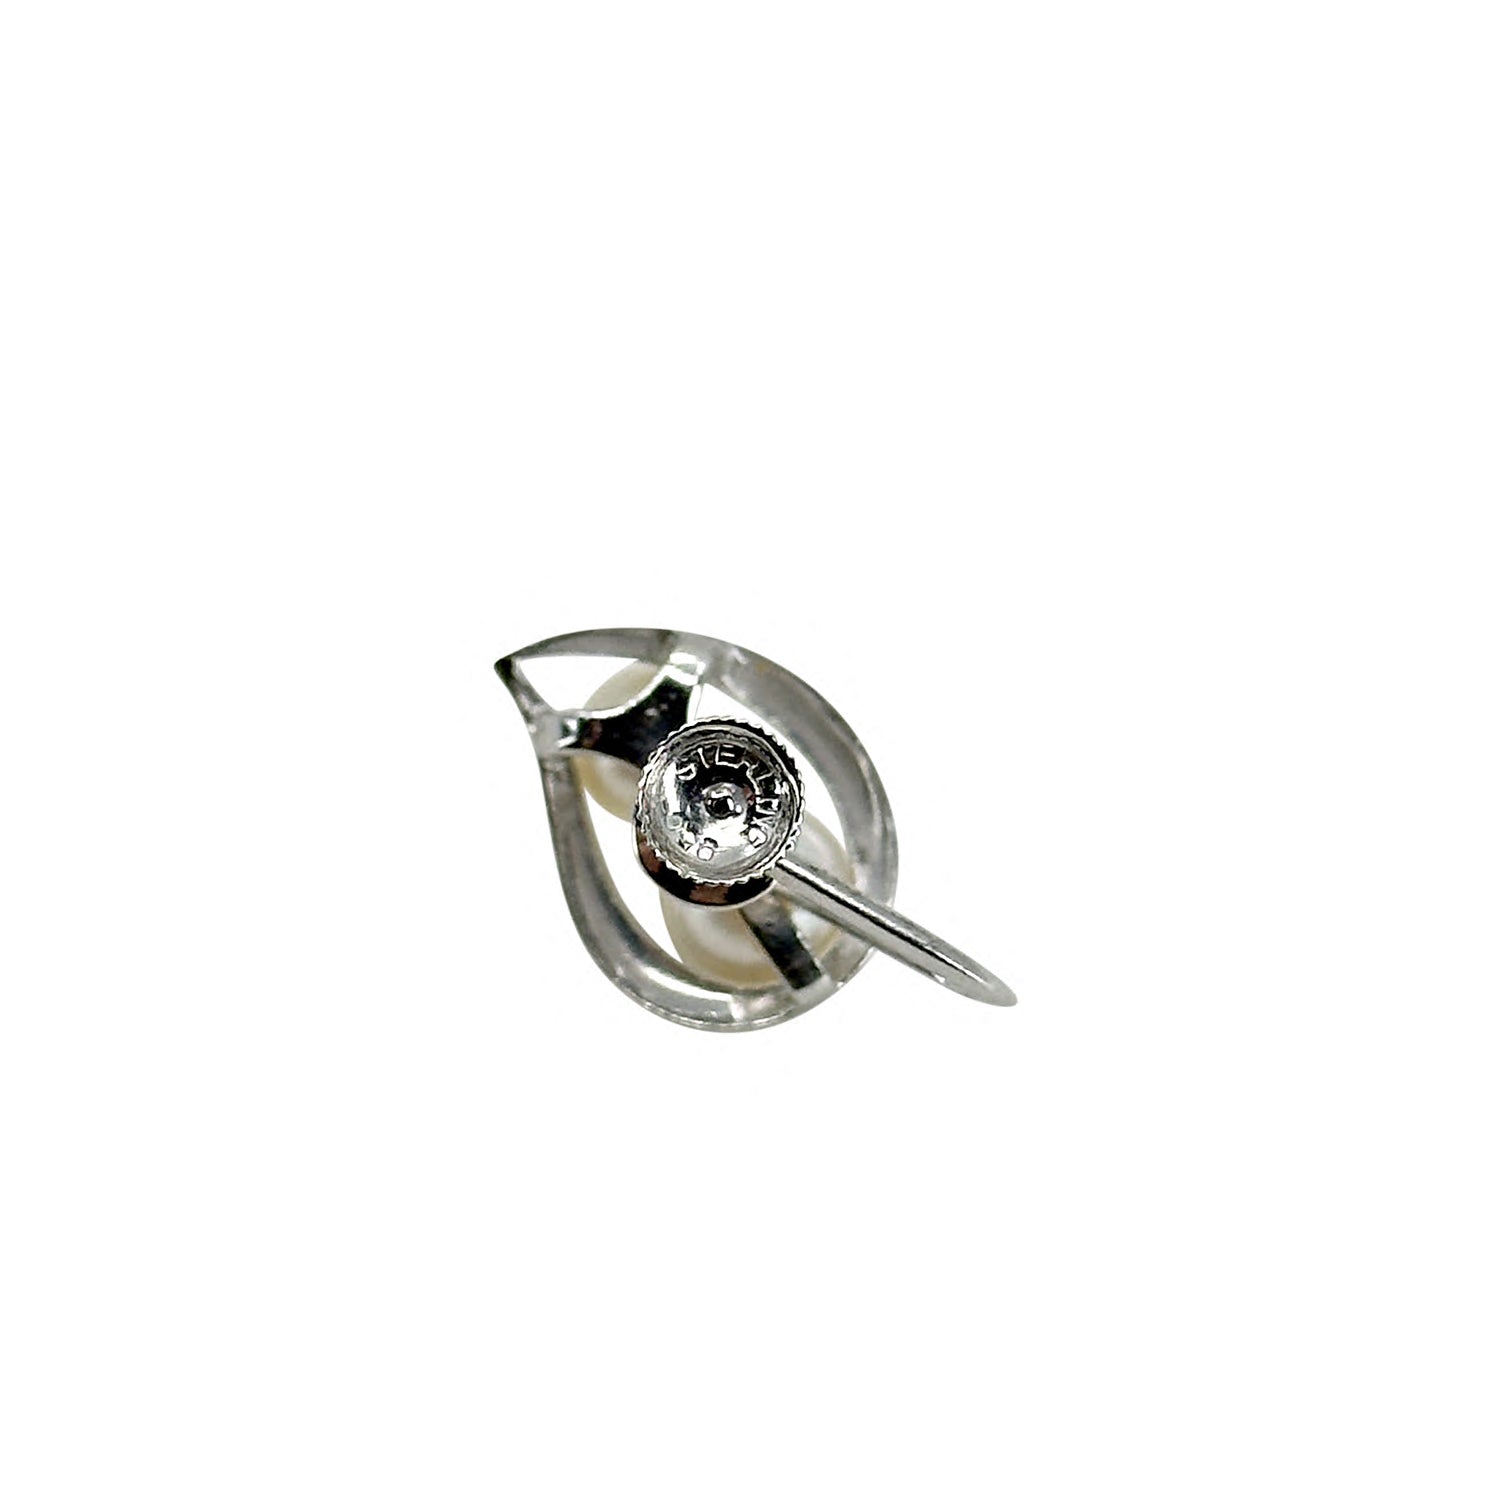 Double Pearl Mid Century Akoya Saltwater Cultured Pearl Screwback Earrings- Sterling Silver